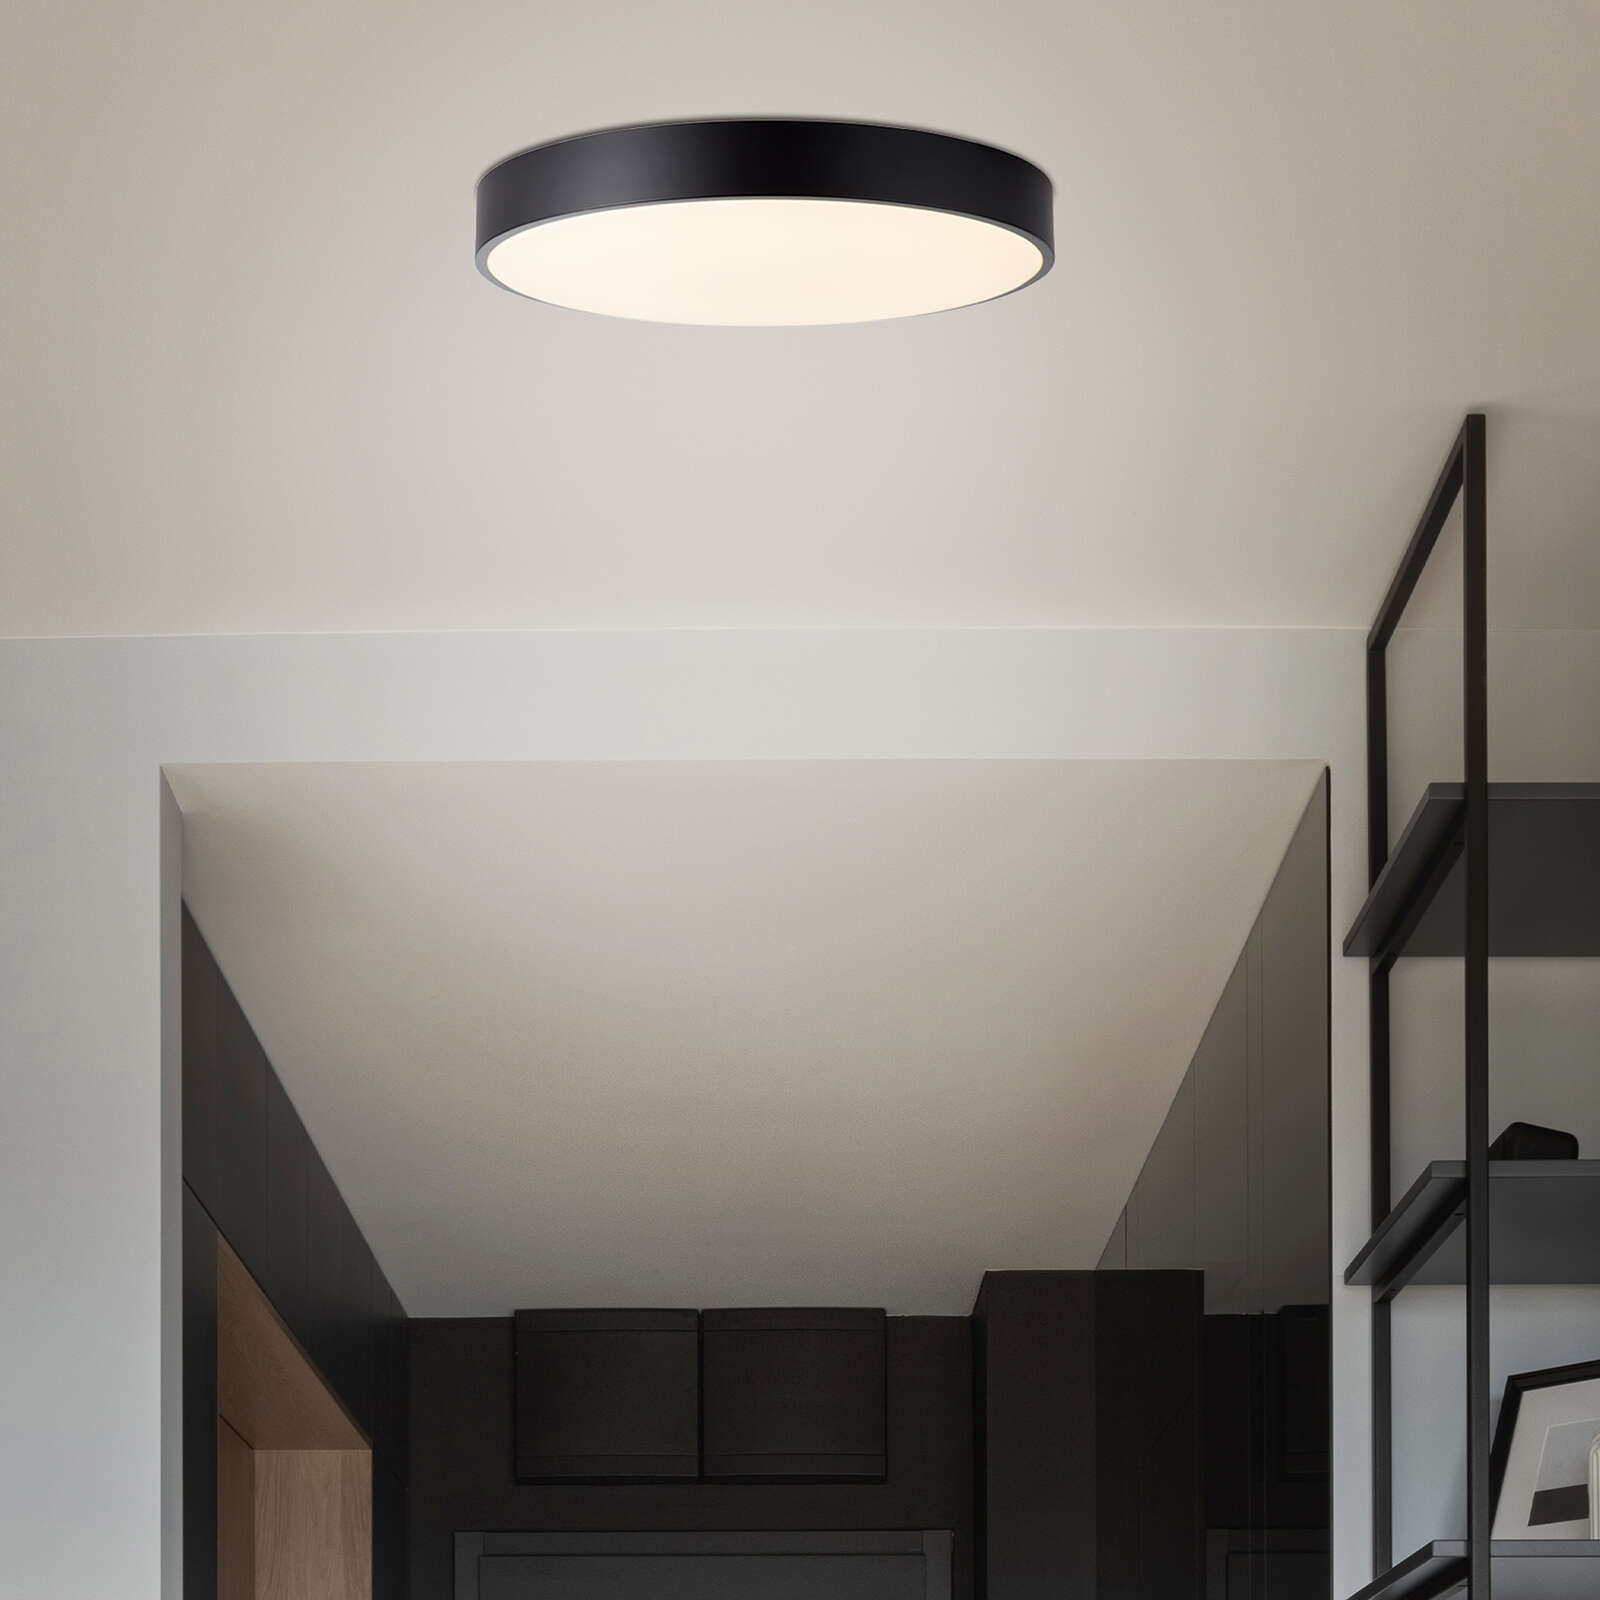             Metal wall and ceiling light - Niklas 3 - Black
        